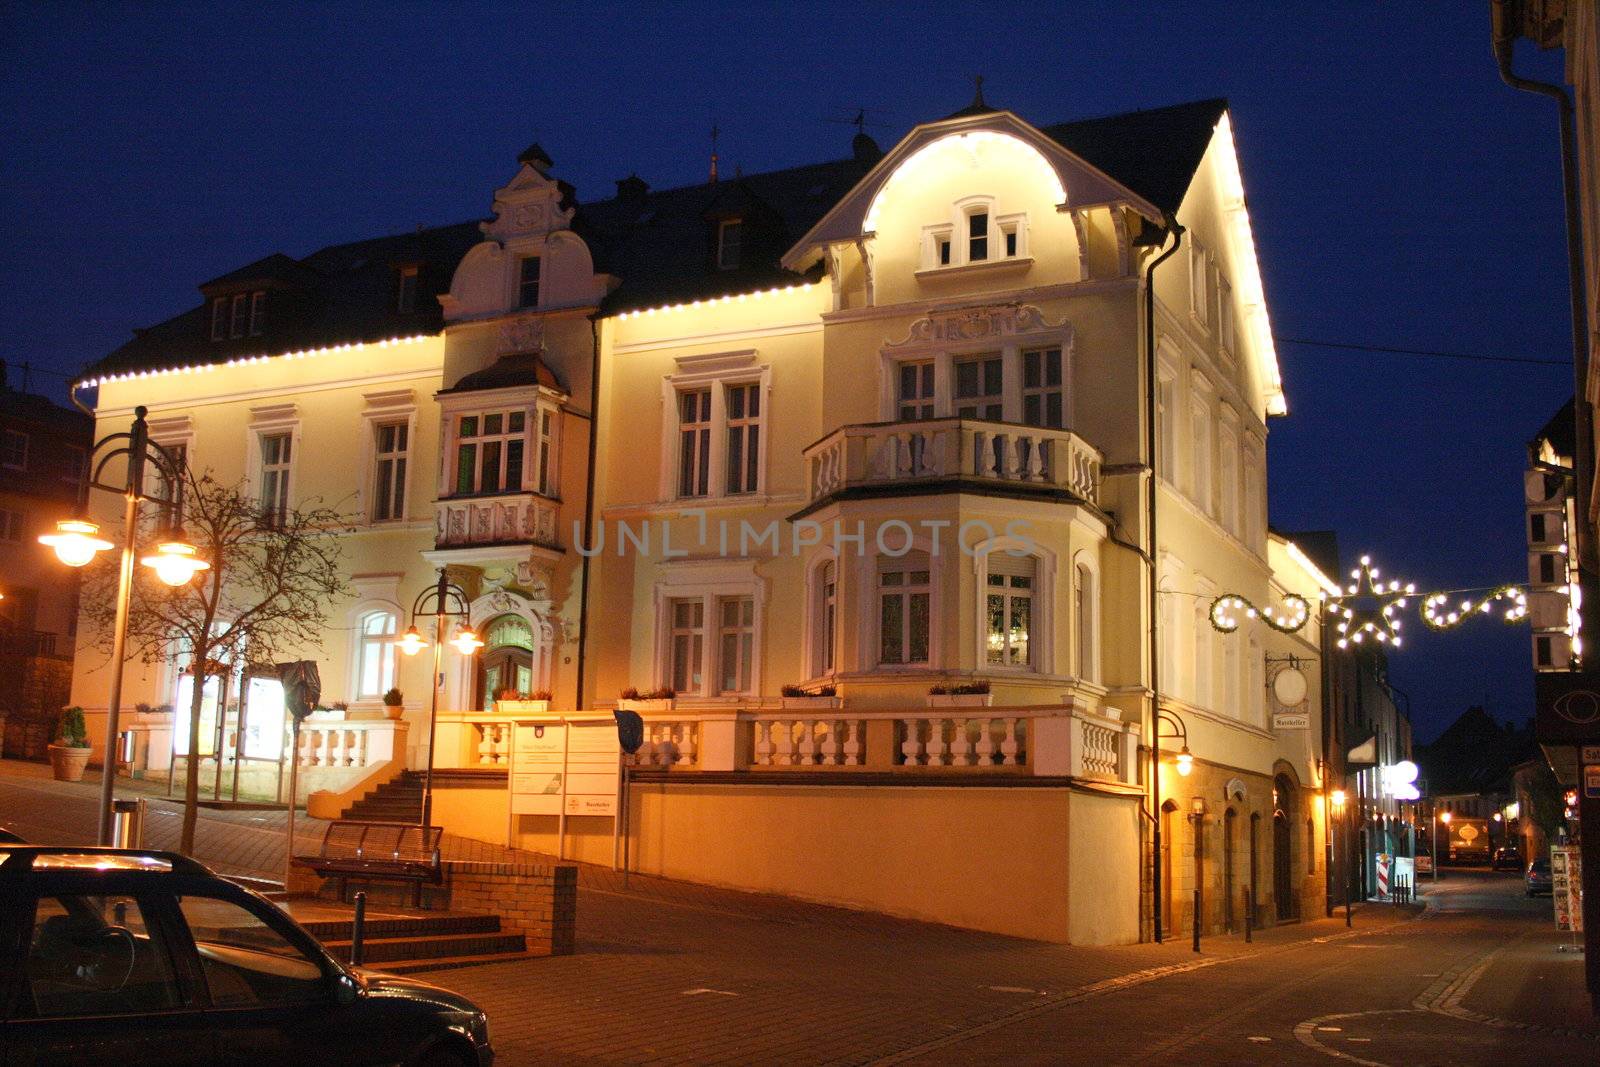 altes Stadhaus,Sitz des Bürgermeisters,am Abend Birkenfeld,Deutschland	
Old Townhouse, home of the mayor, in the evening Birkenfeld, Germany